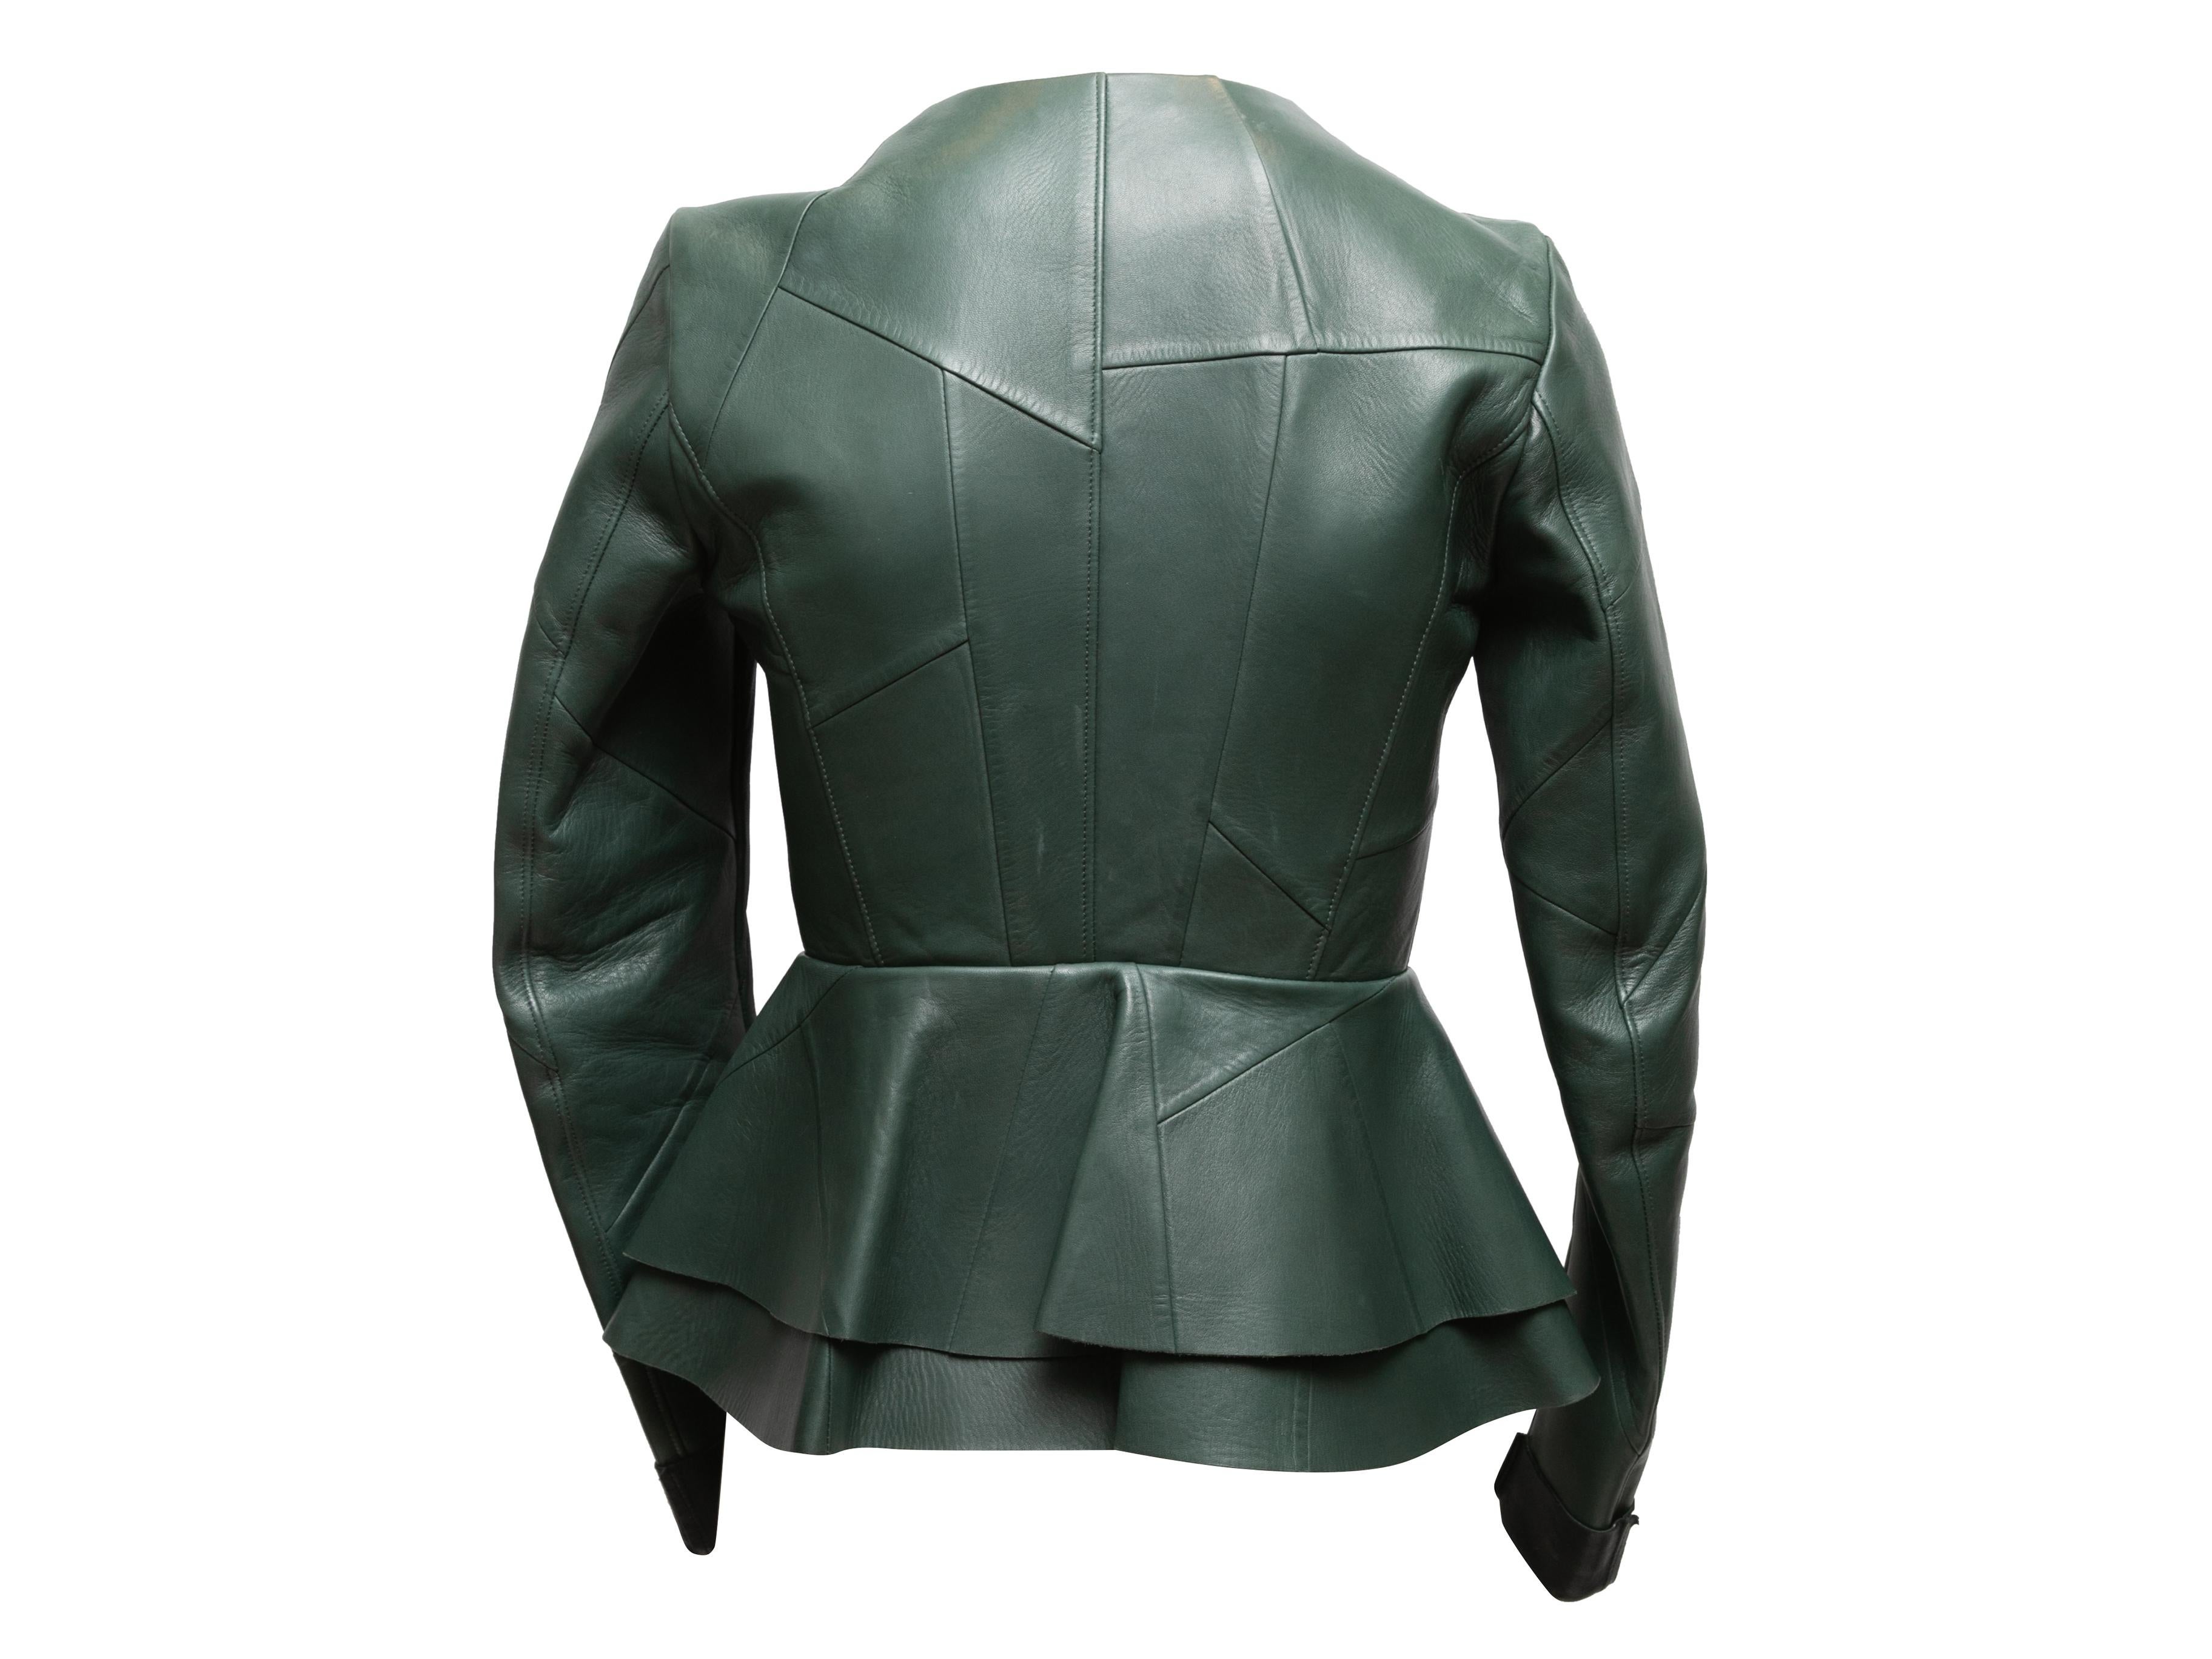 Dark green leather peplum jacket by Celine. Crew neck. Zip closure at center front. 31